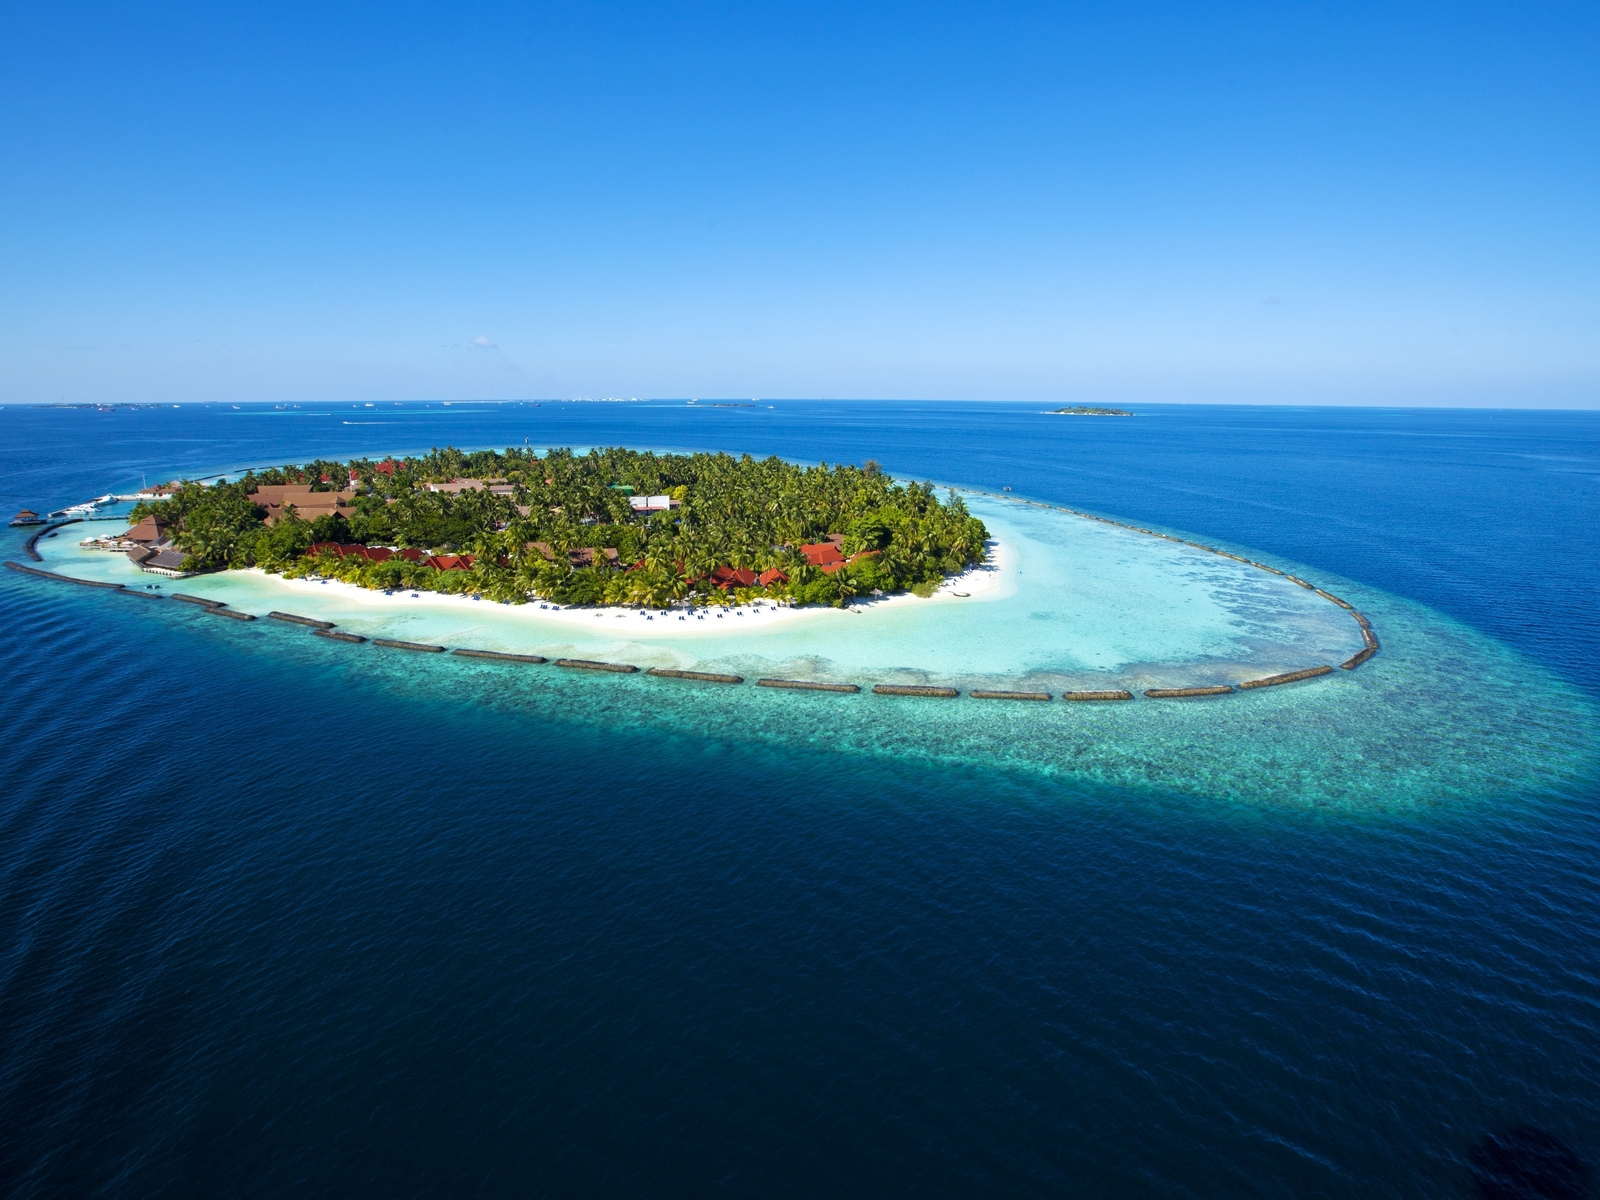 Amazing Maldives Island View for 1600 x 1200 resolution